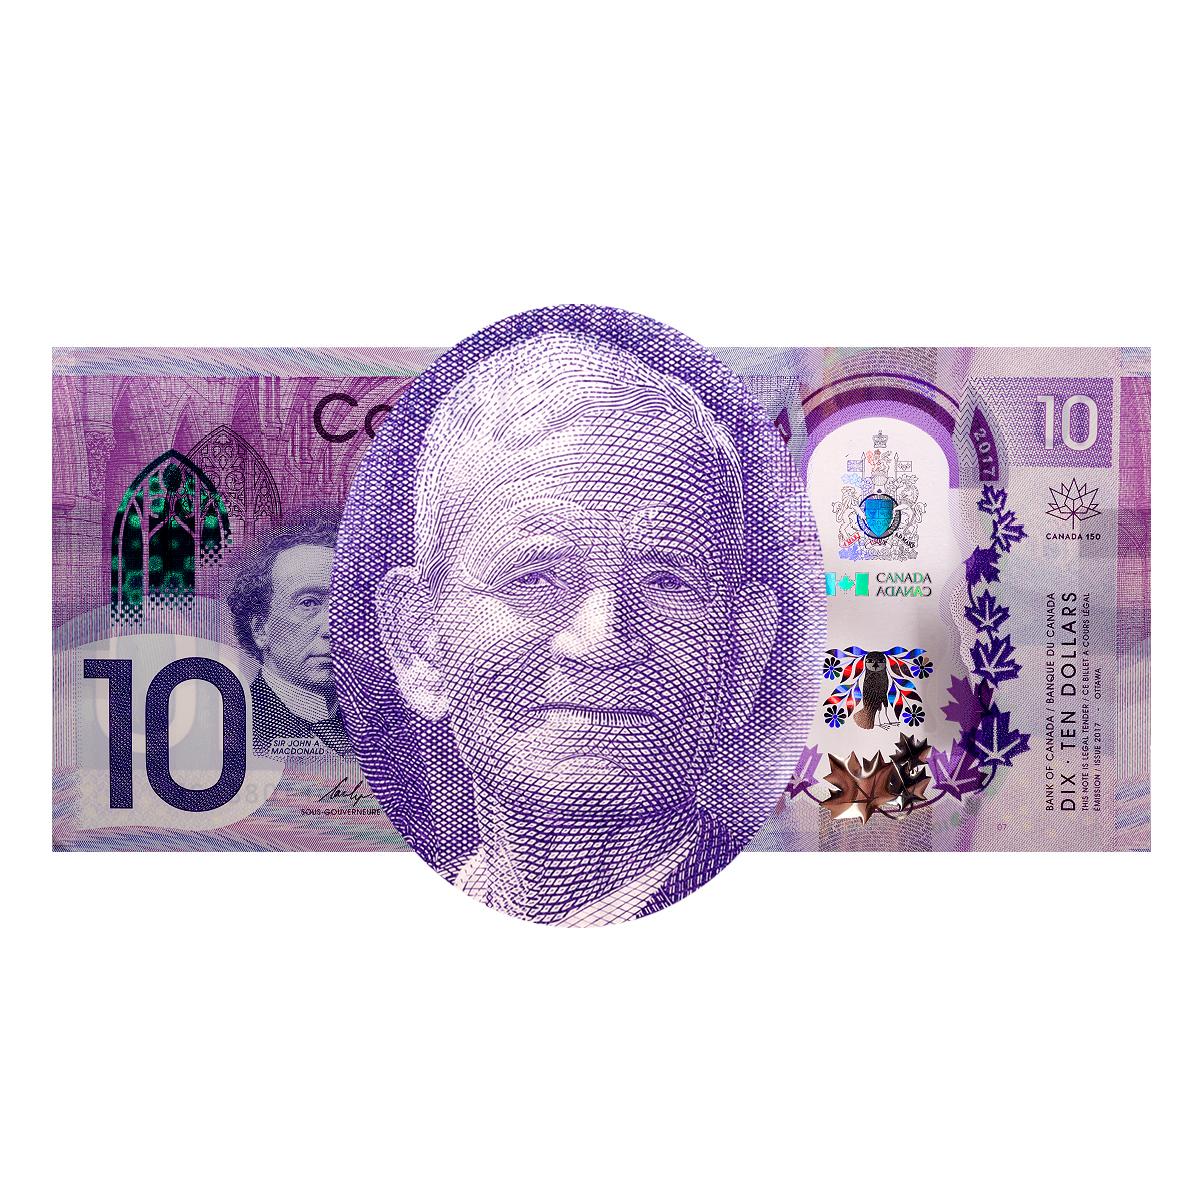 Bank note portrait, older Indigenous man in suit.